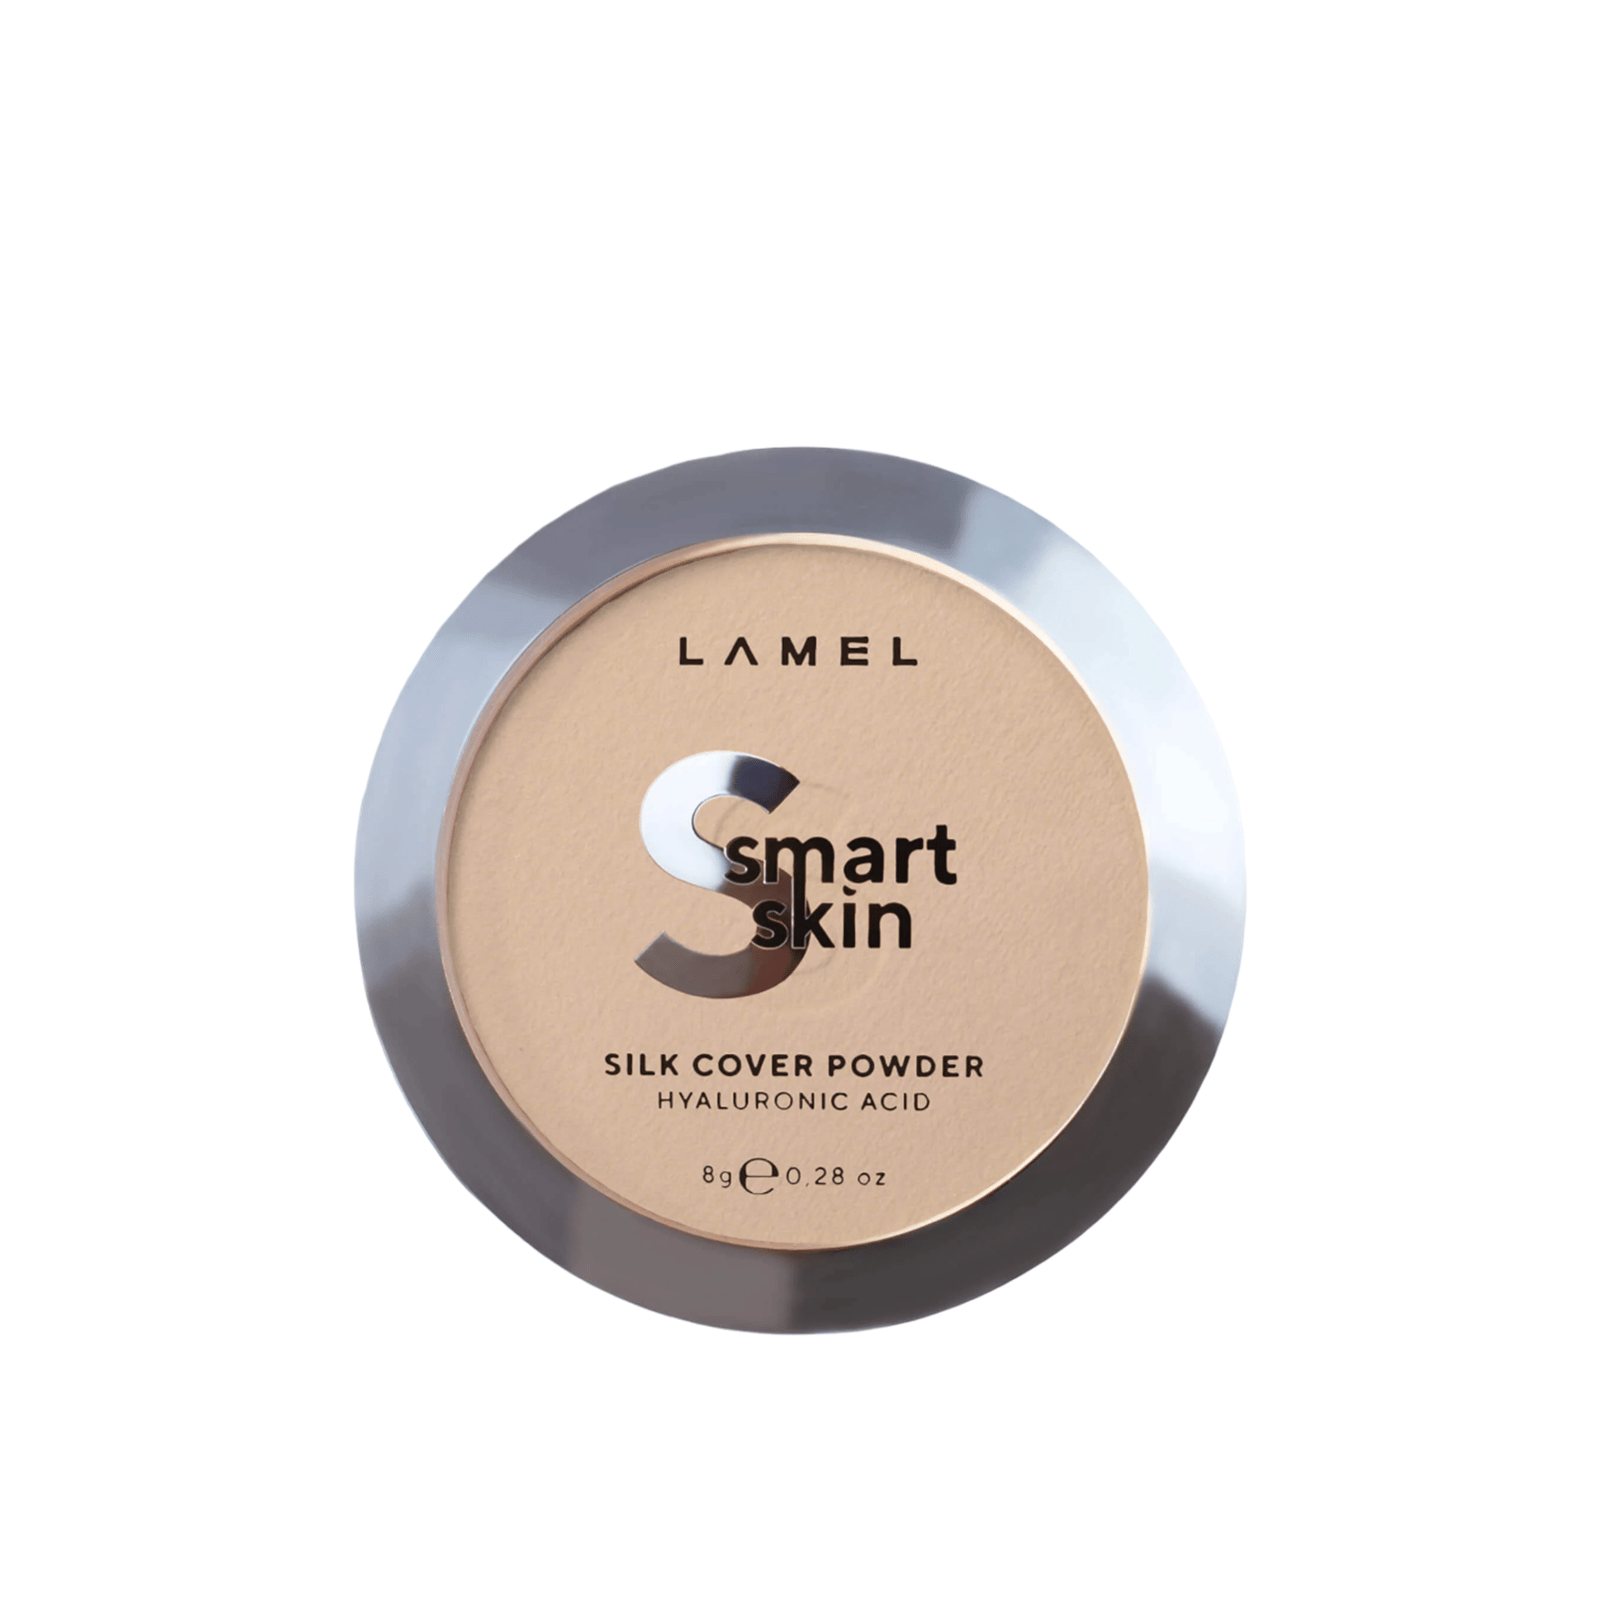 Lamel Smart Skin Silk Cover Powder 403 Medium Beige 8g (0.28oz)